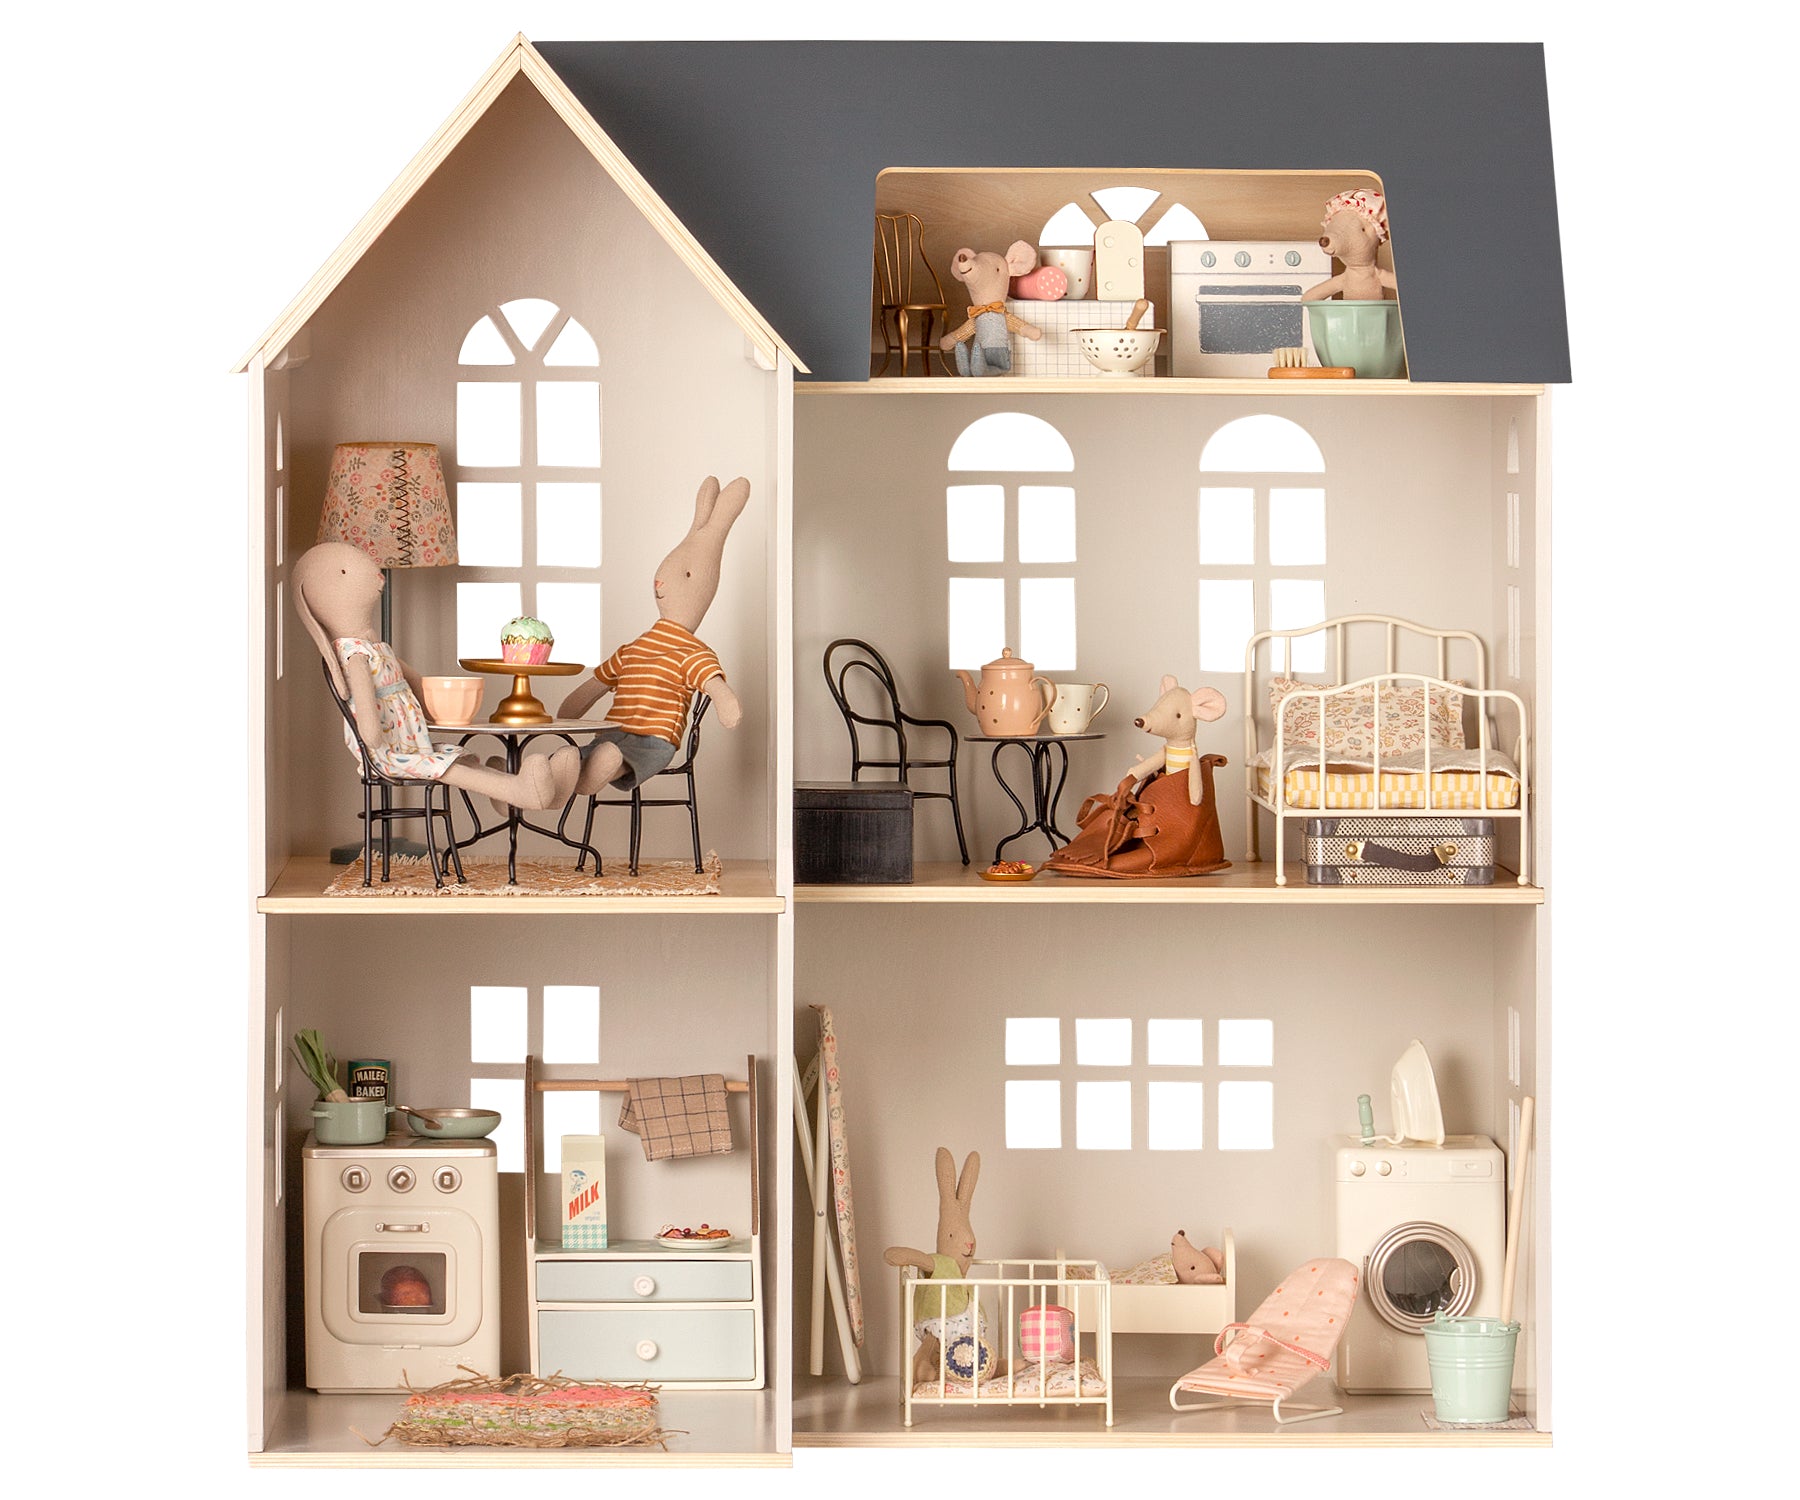 Maileg House of Miniature – Dollhouse